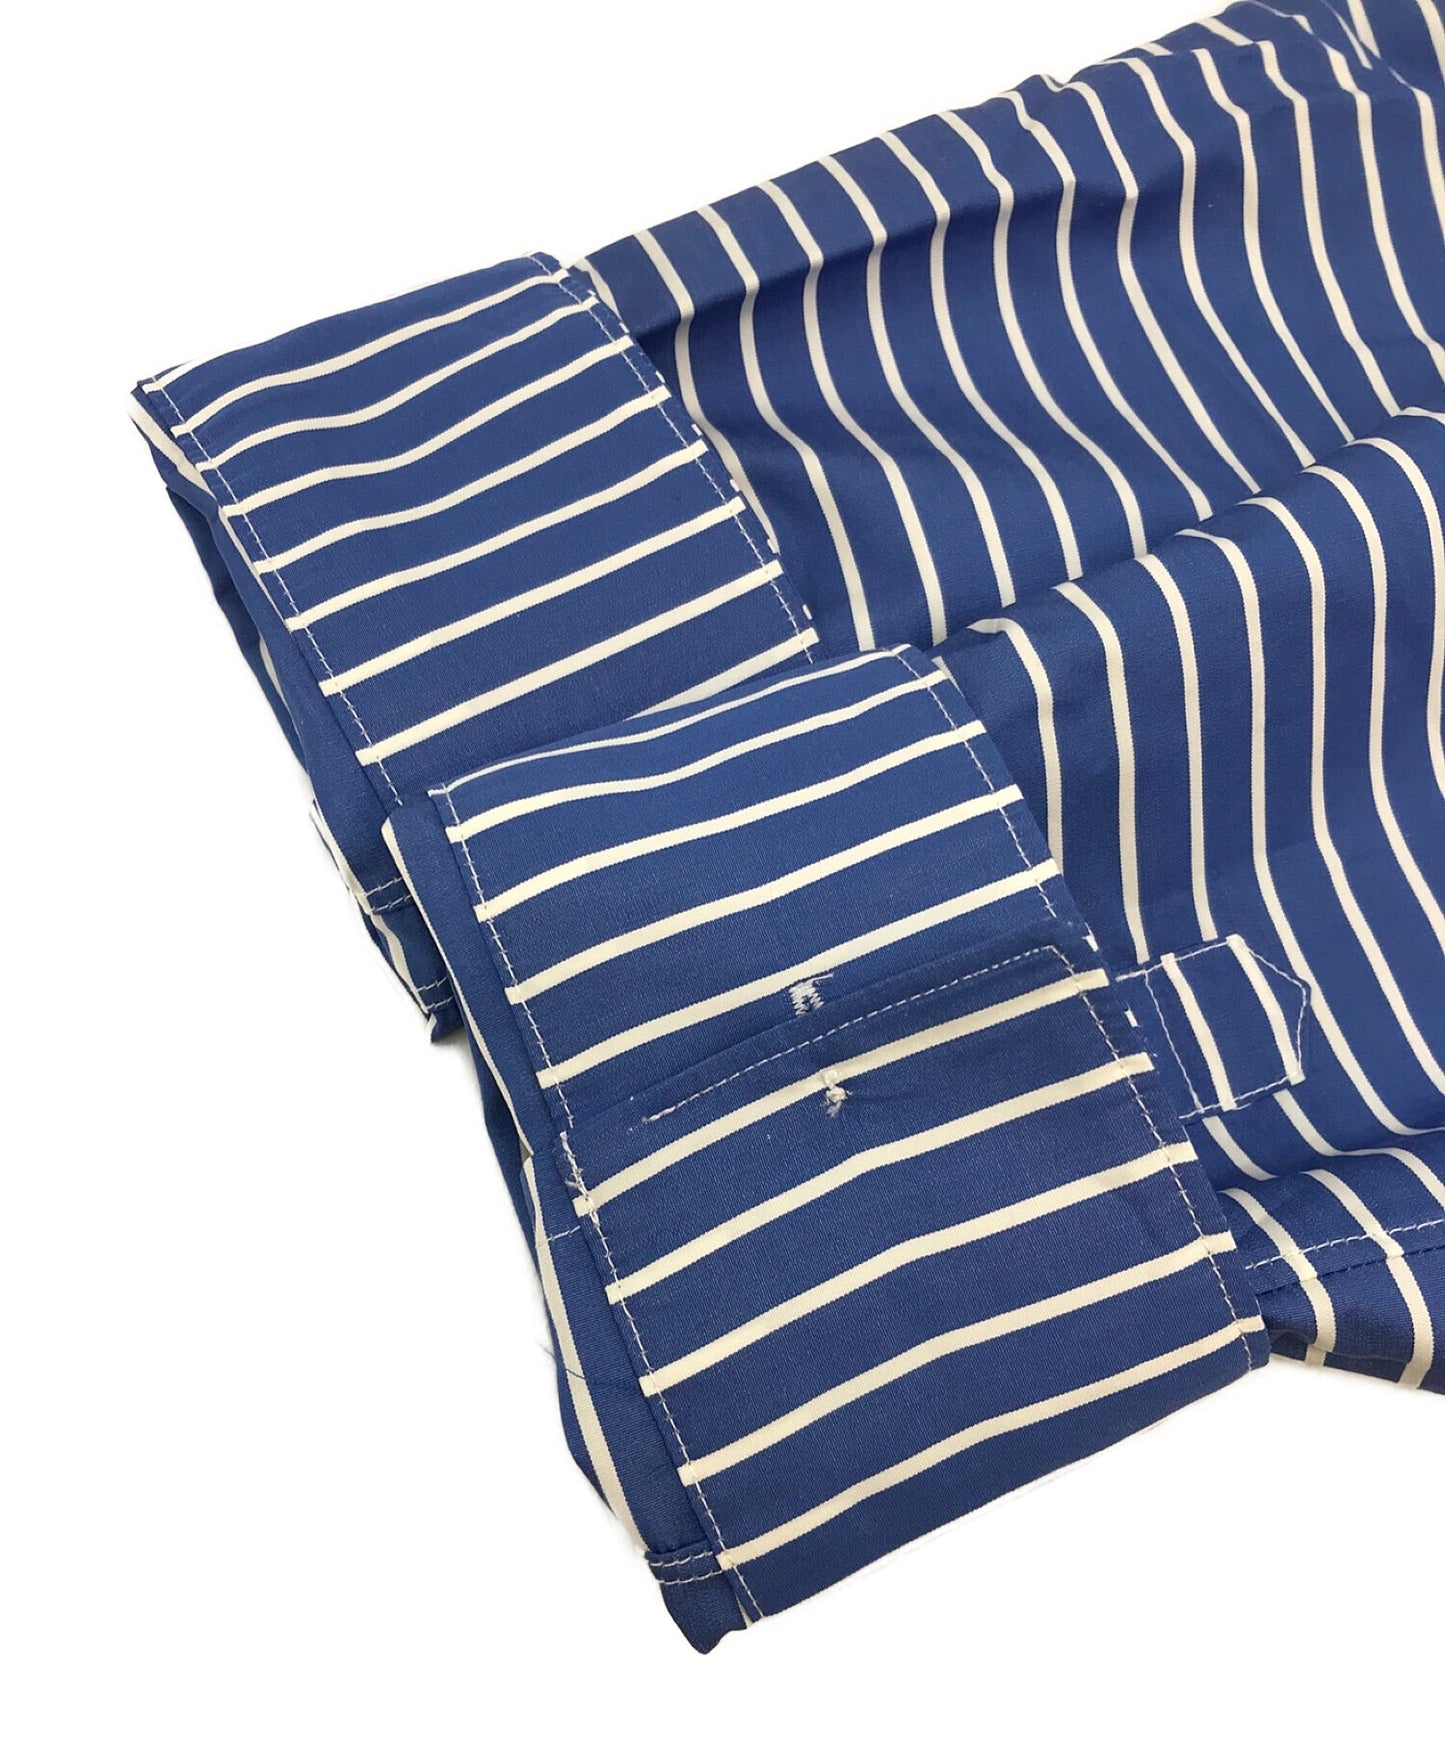 COMME des GARCONS SHIRT Cutaway striped shirt Striped shirt Striped shirt Long-sleeved shirt Shirt FZ-B119-PER-1